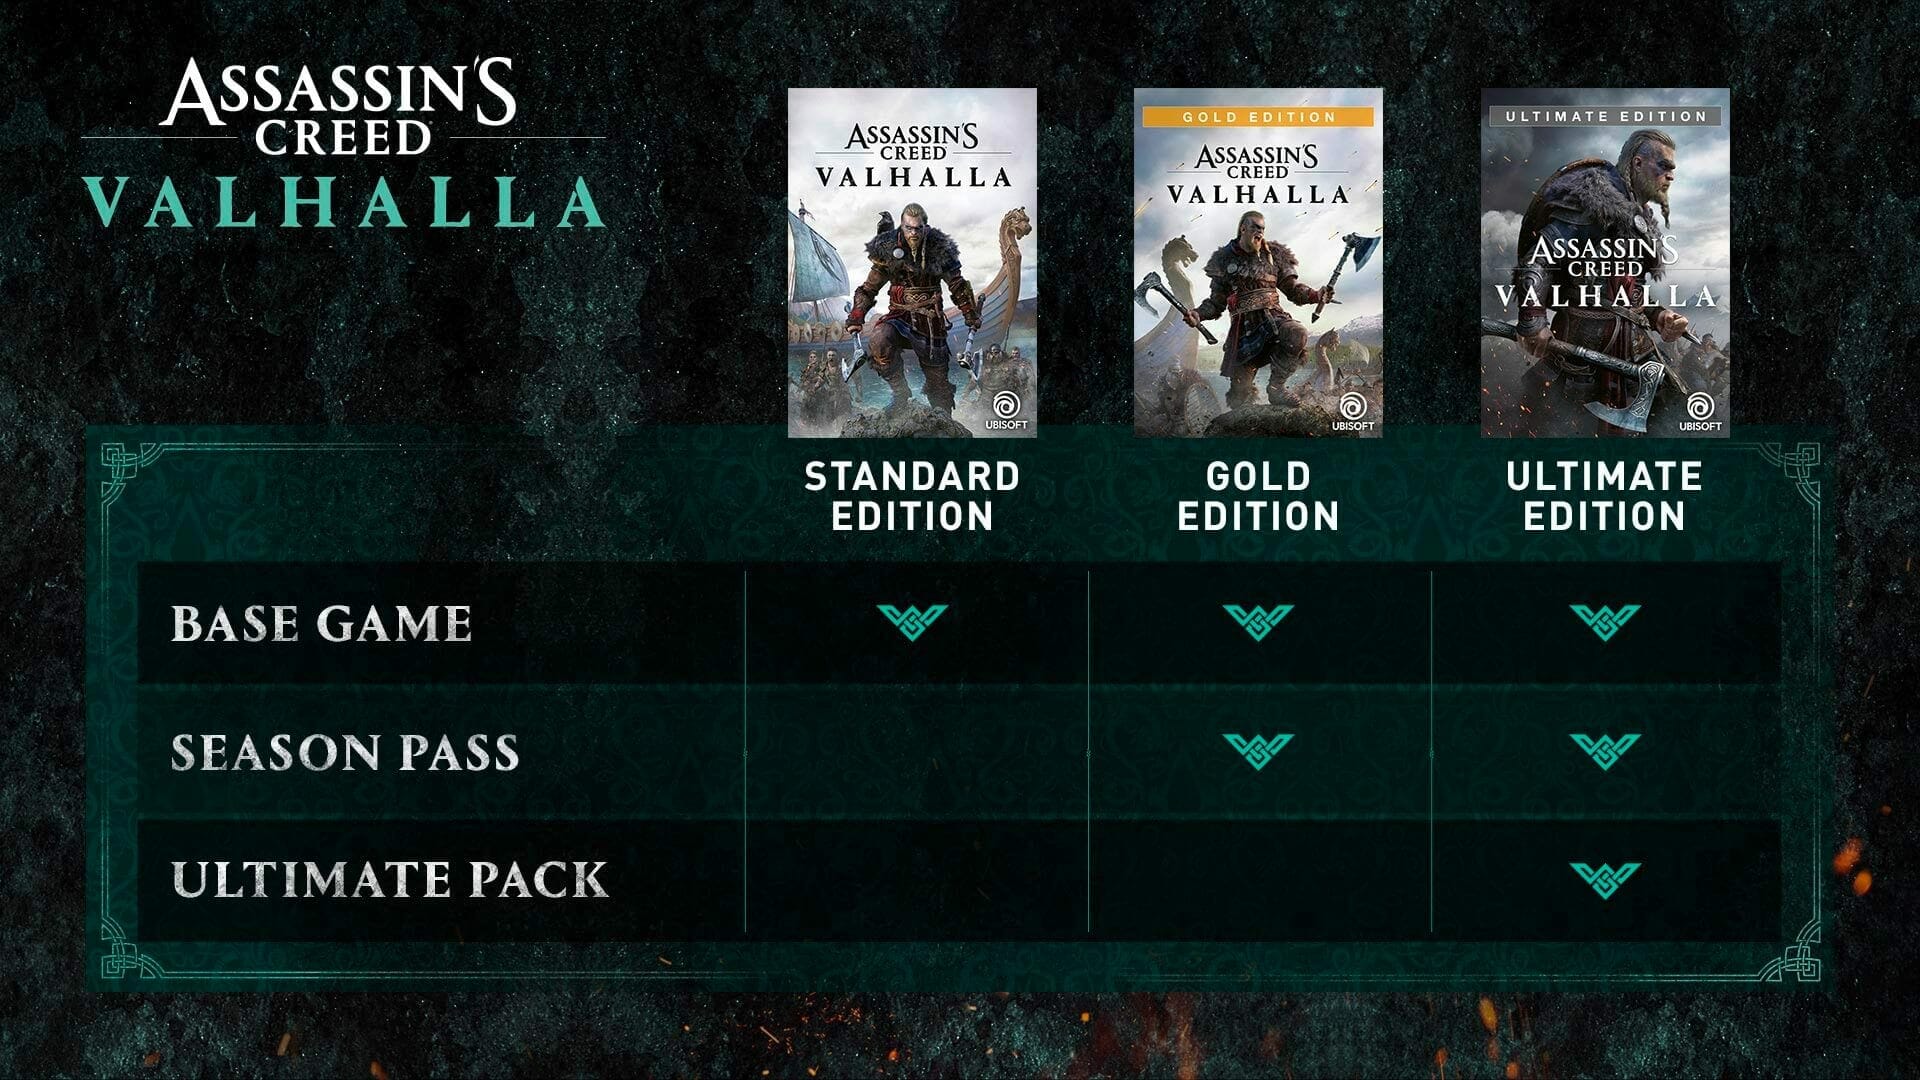 Assassin's Creed Valhalla Pre-Order Bonus